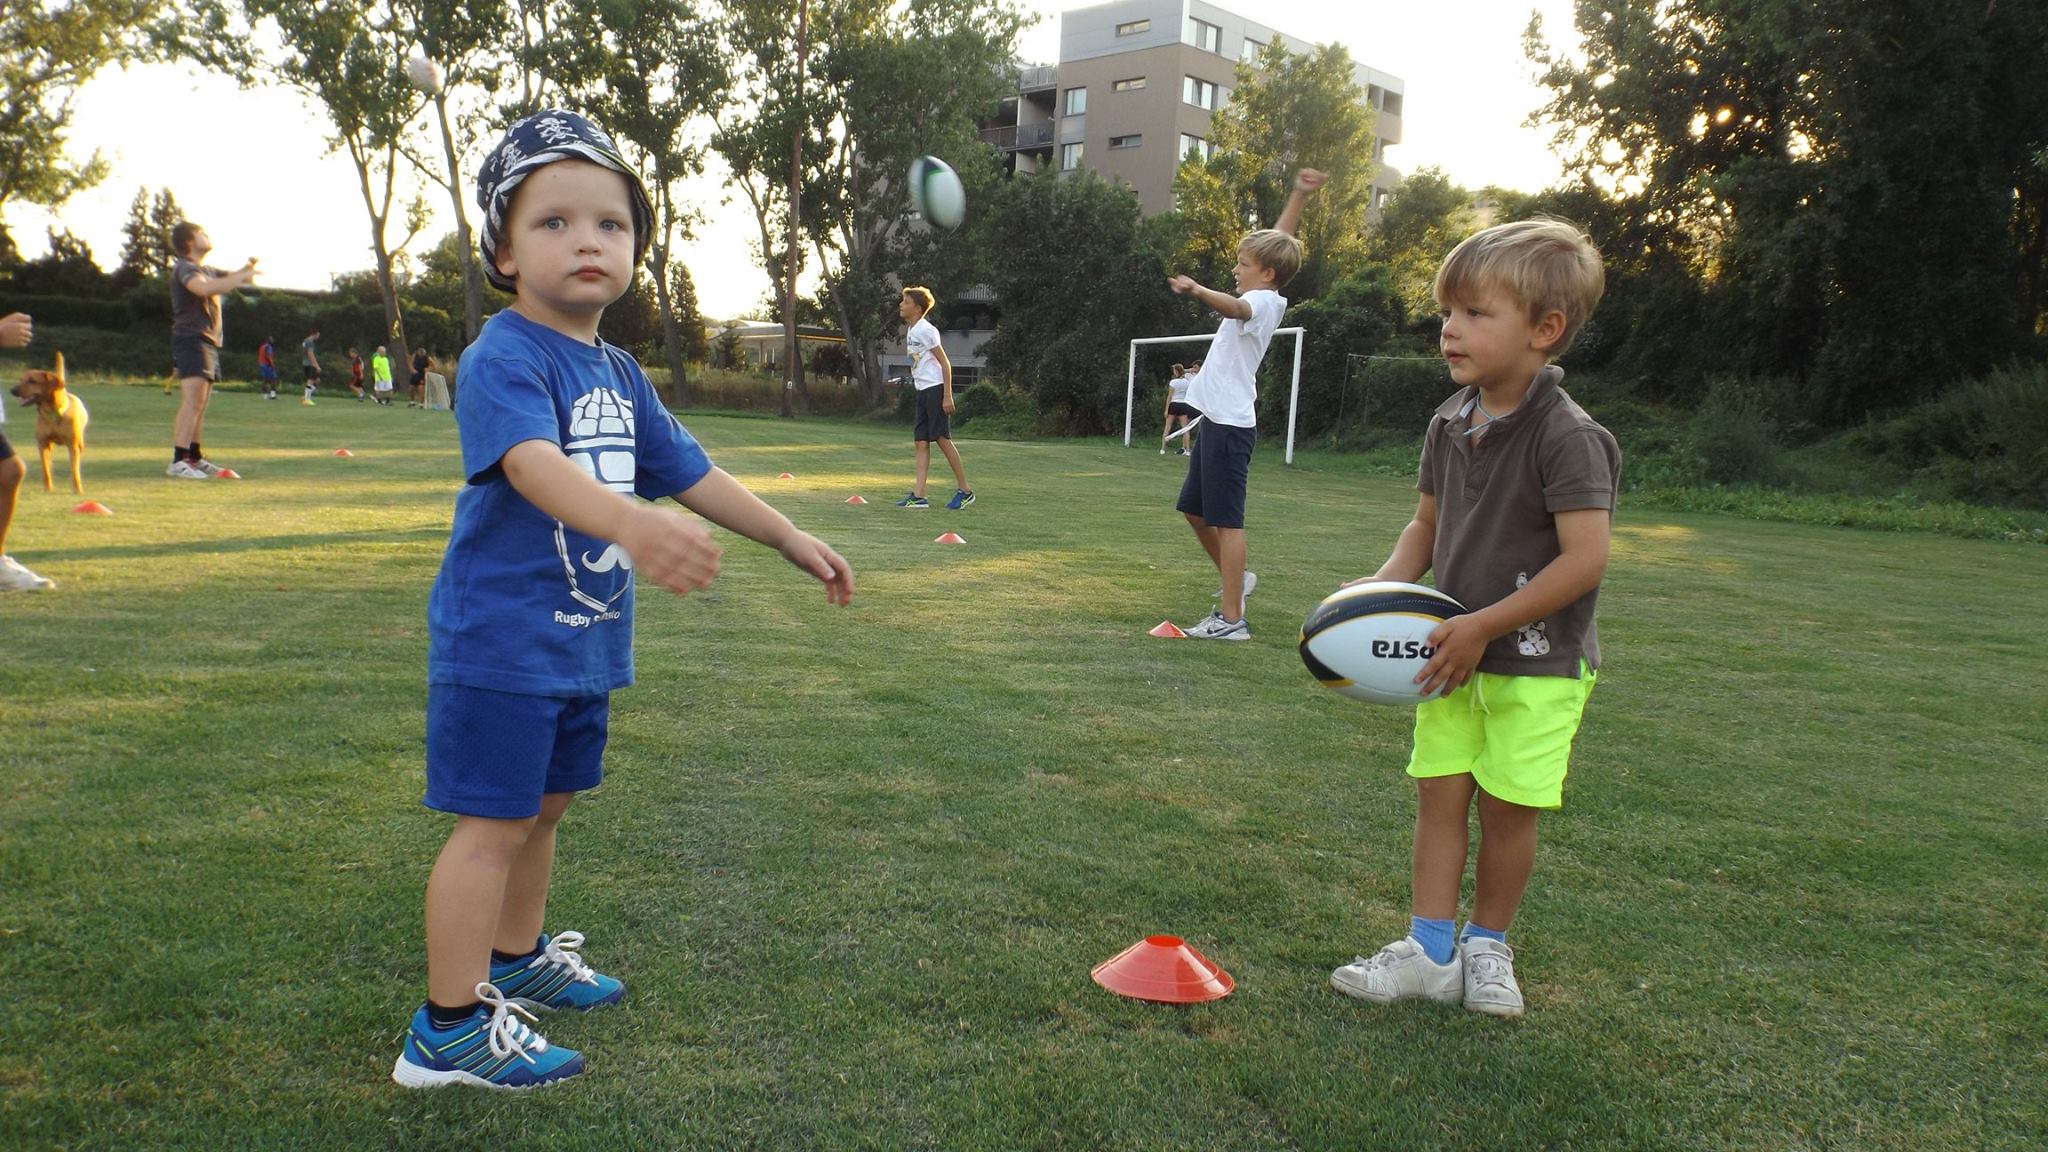 https://rugbyklubbratislava.files.wordpress.com/2015/08/children-rkb.jpg